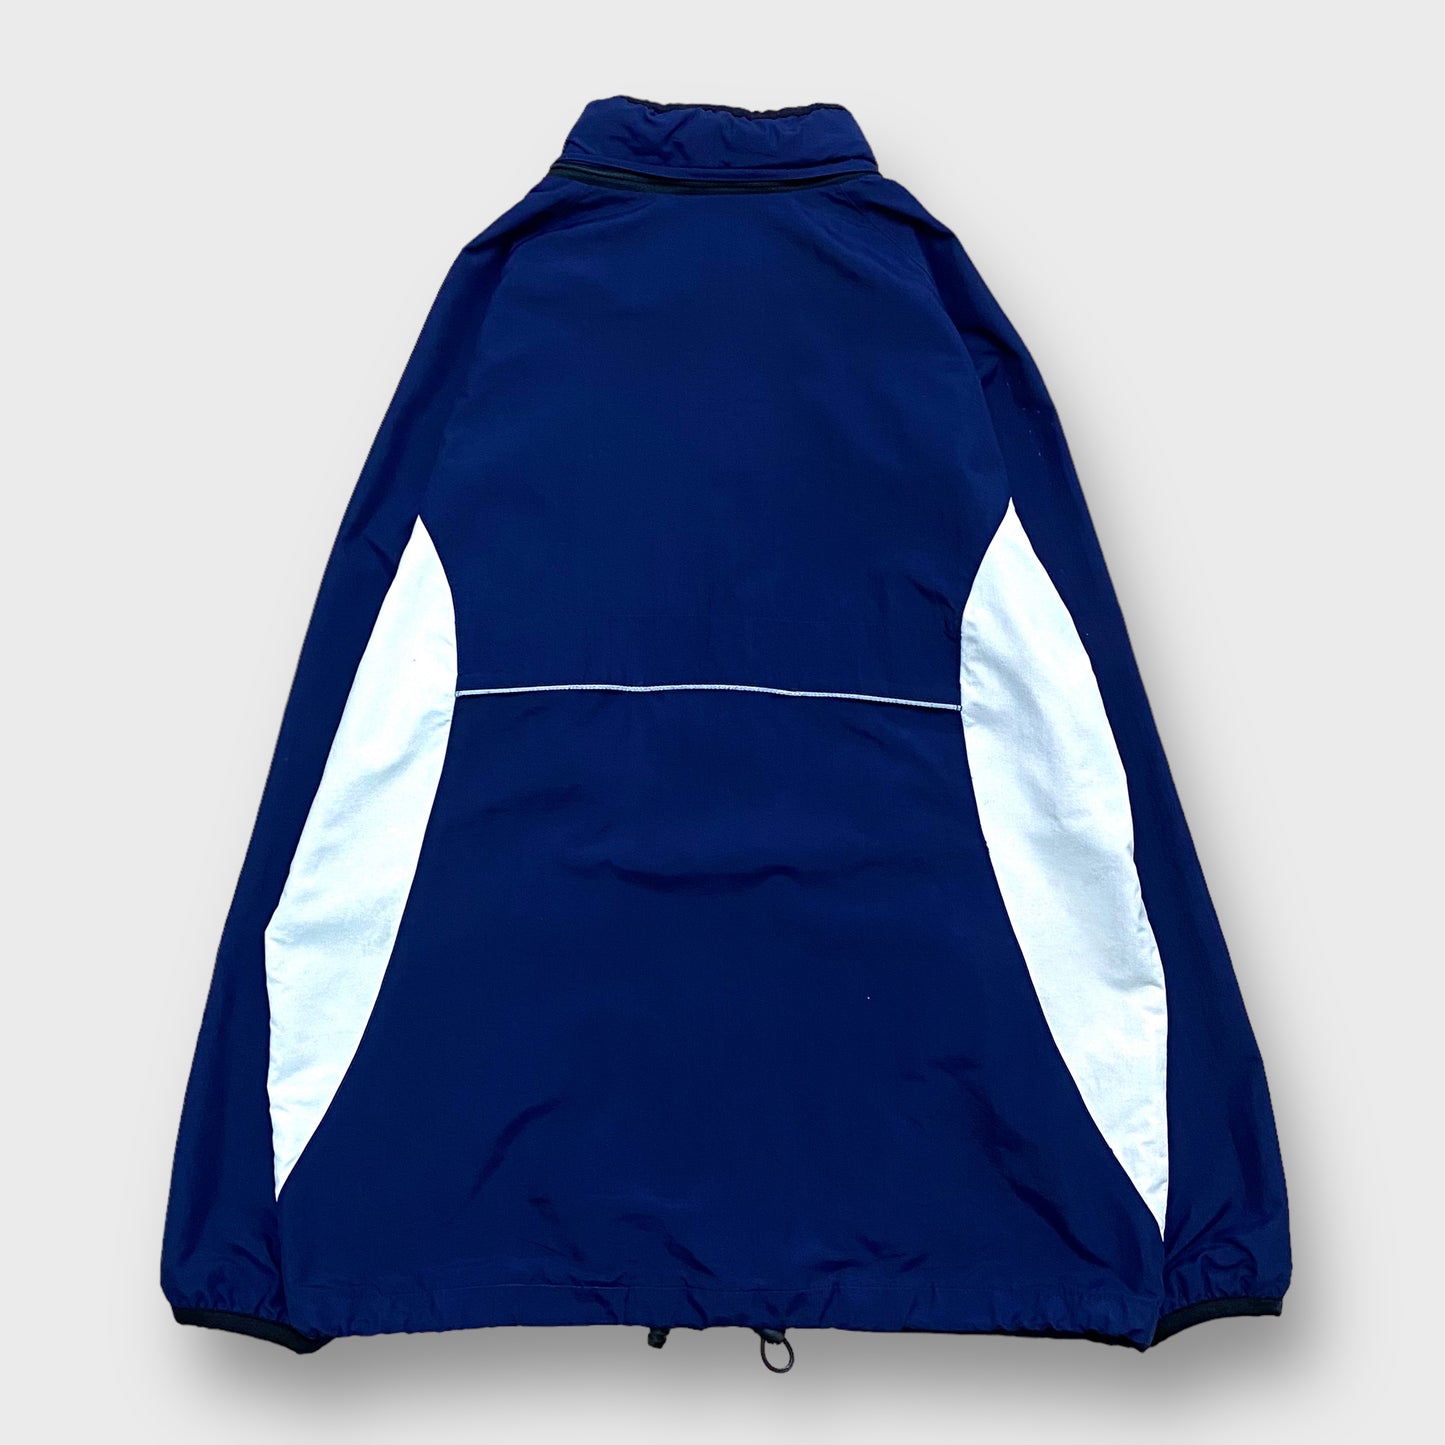 00’s "OAKLEY" Bi-color nylon jacket